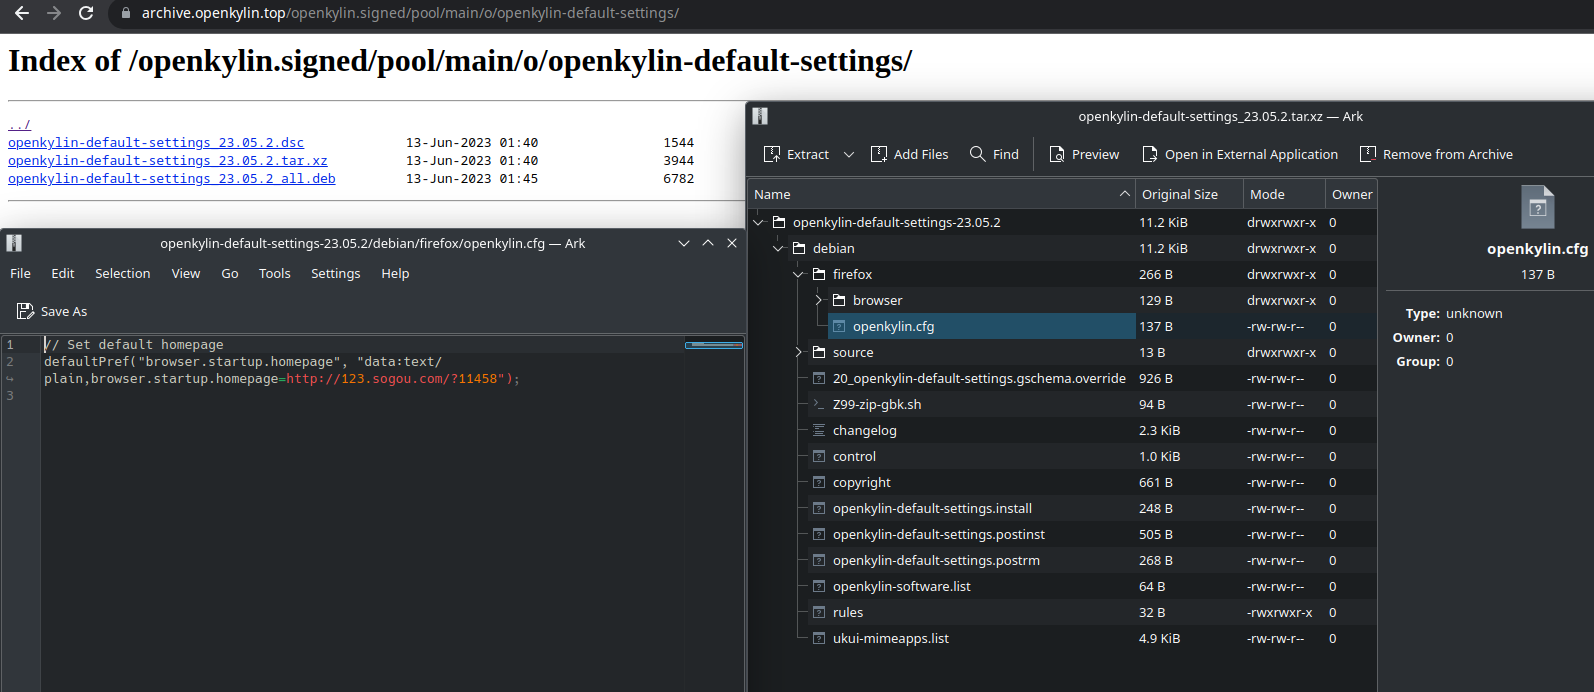 openkylin-default-settings-23.05.2